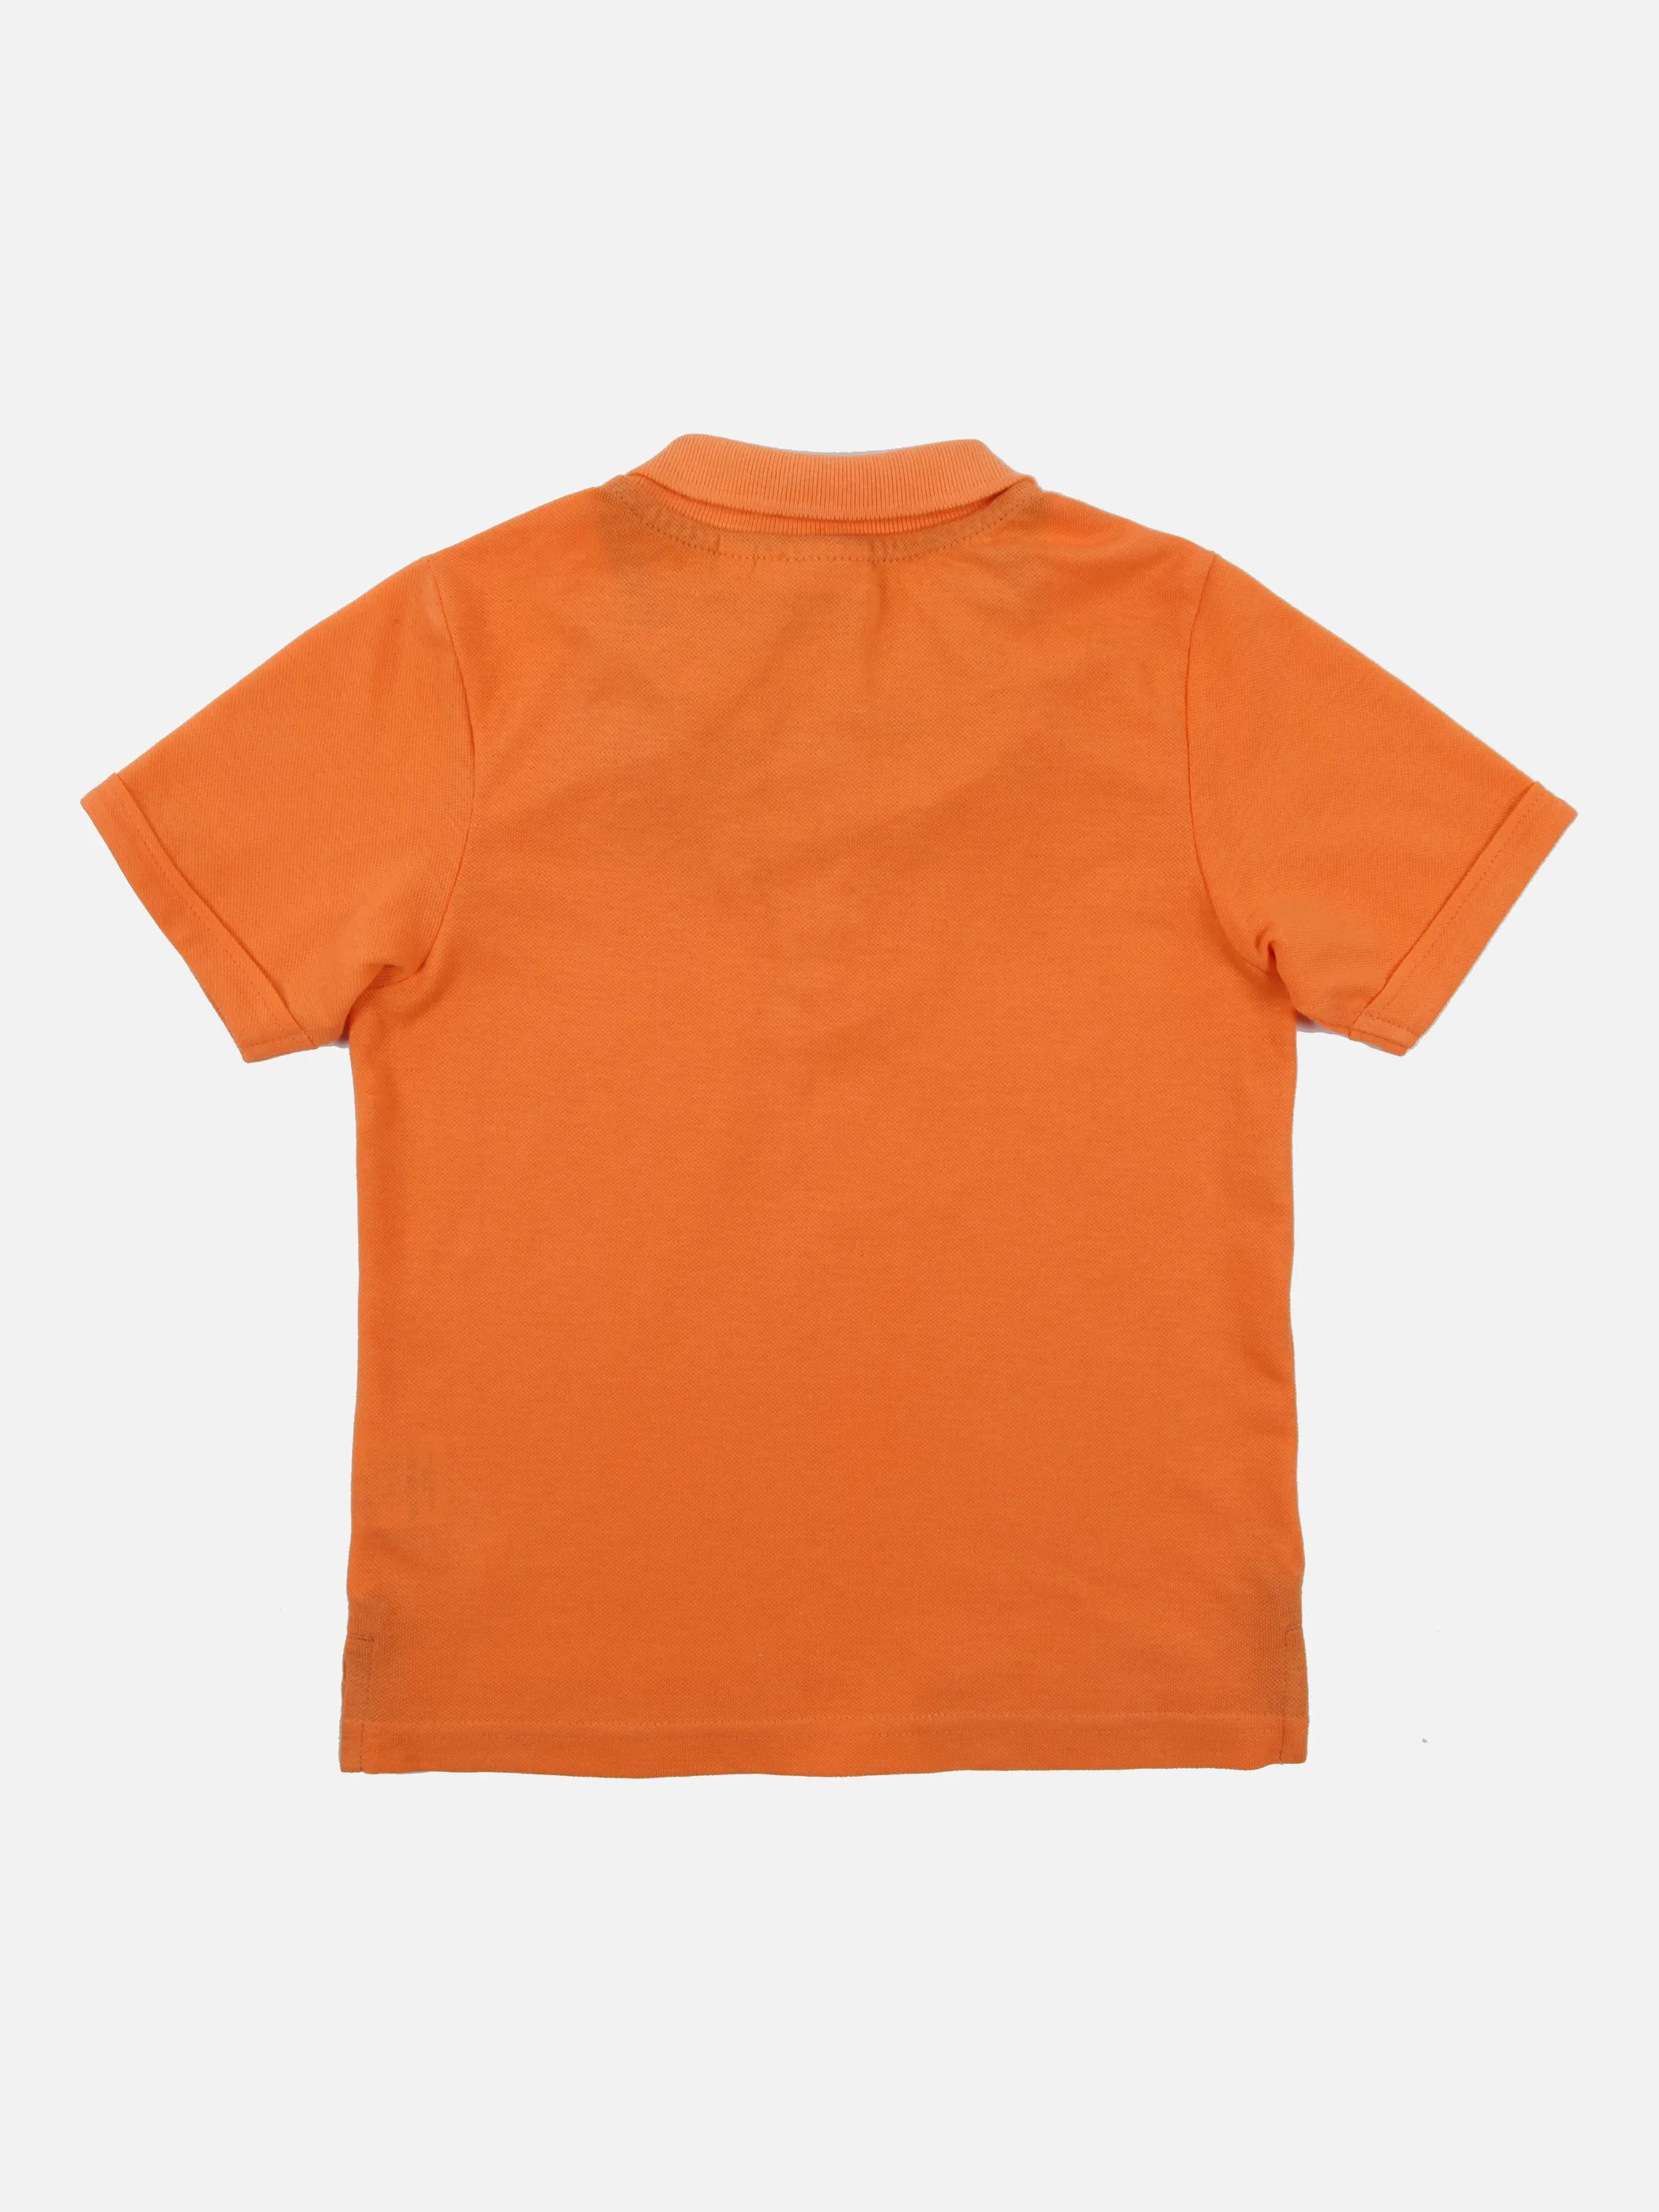 Stop + Go MB Poloshirt 1/4 Arm in orange Orange 851600 ORANGE 2